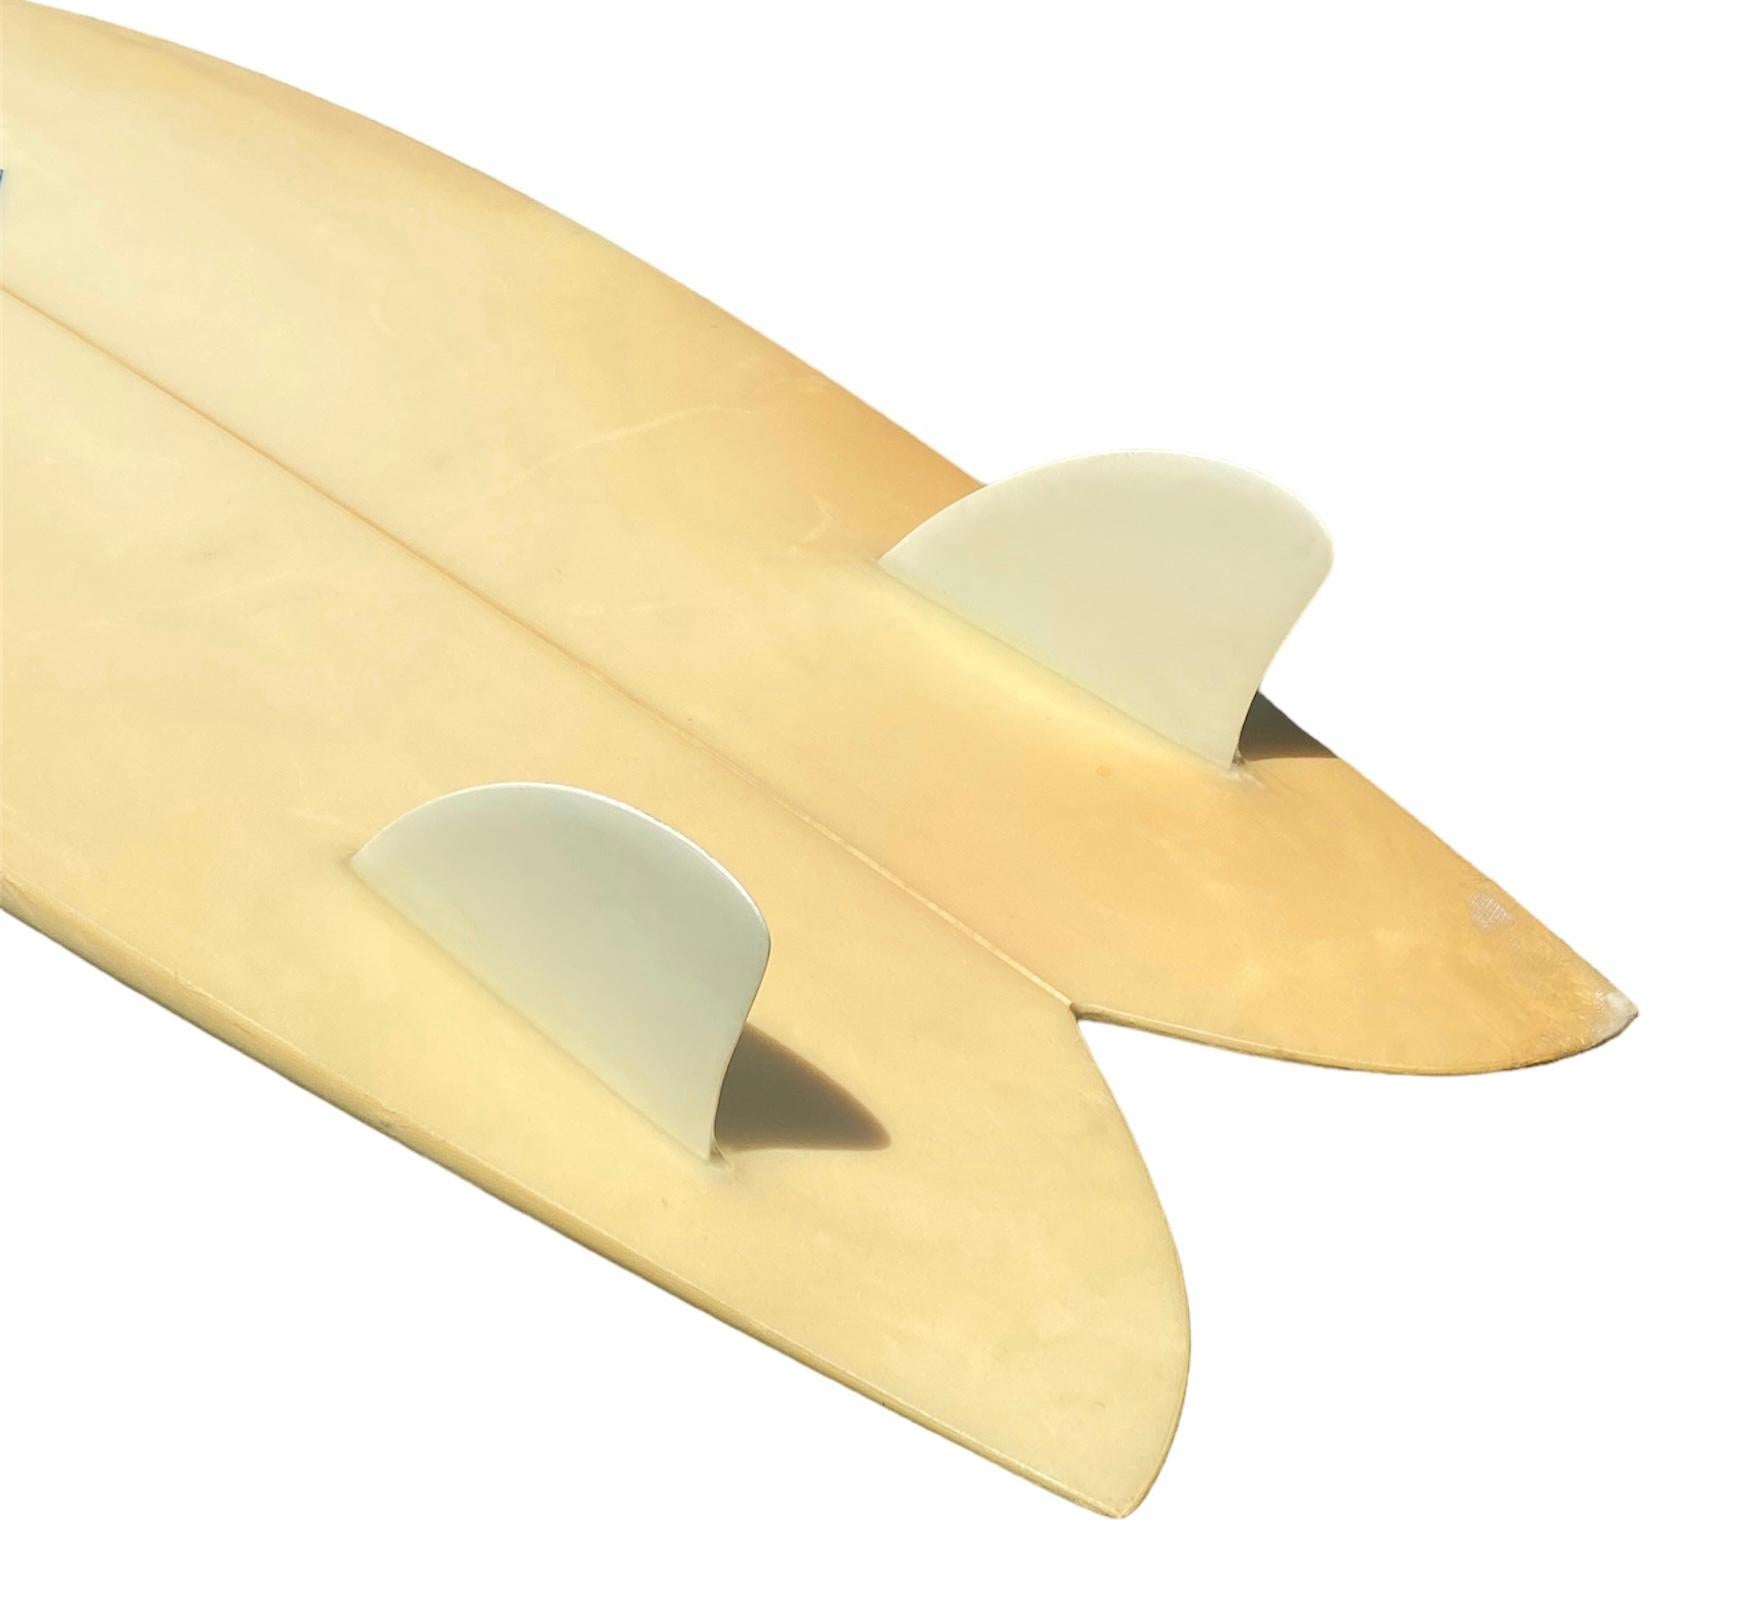 American Steve Lis shaped ‘Flaming’ Fish surfboard